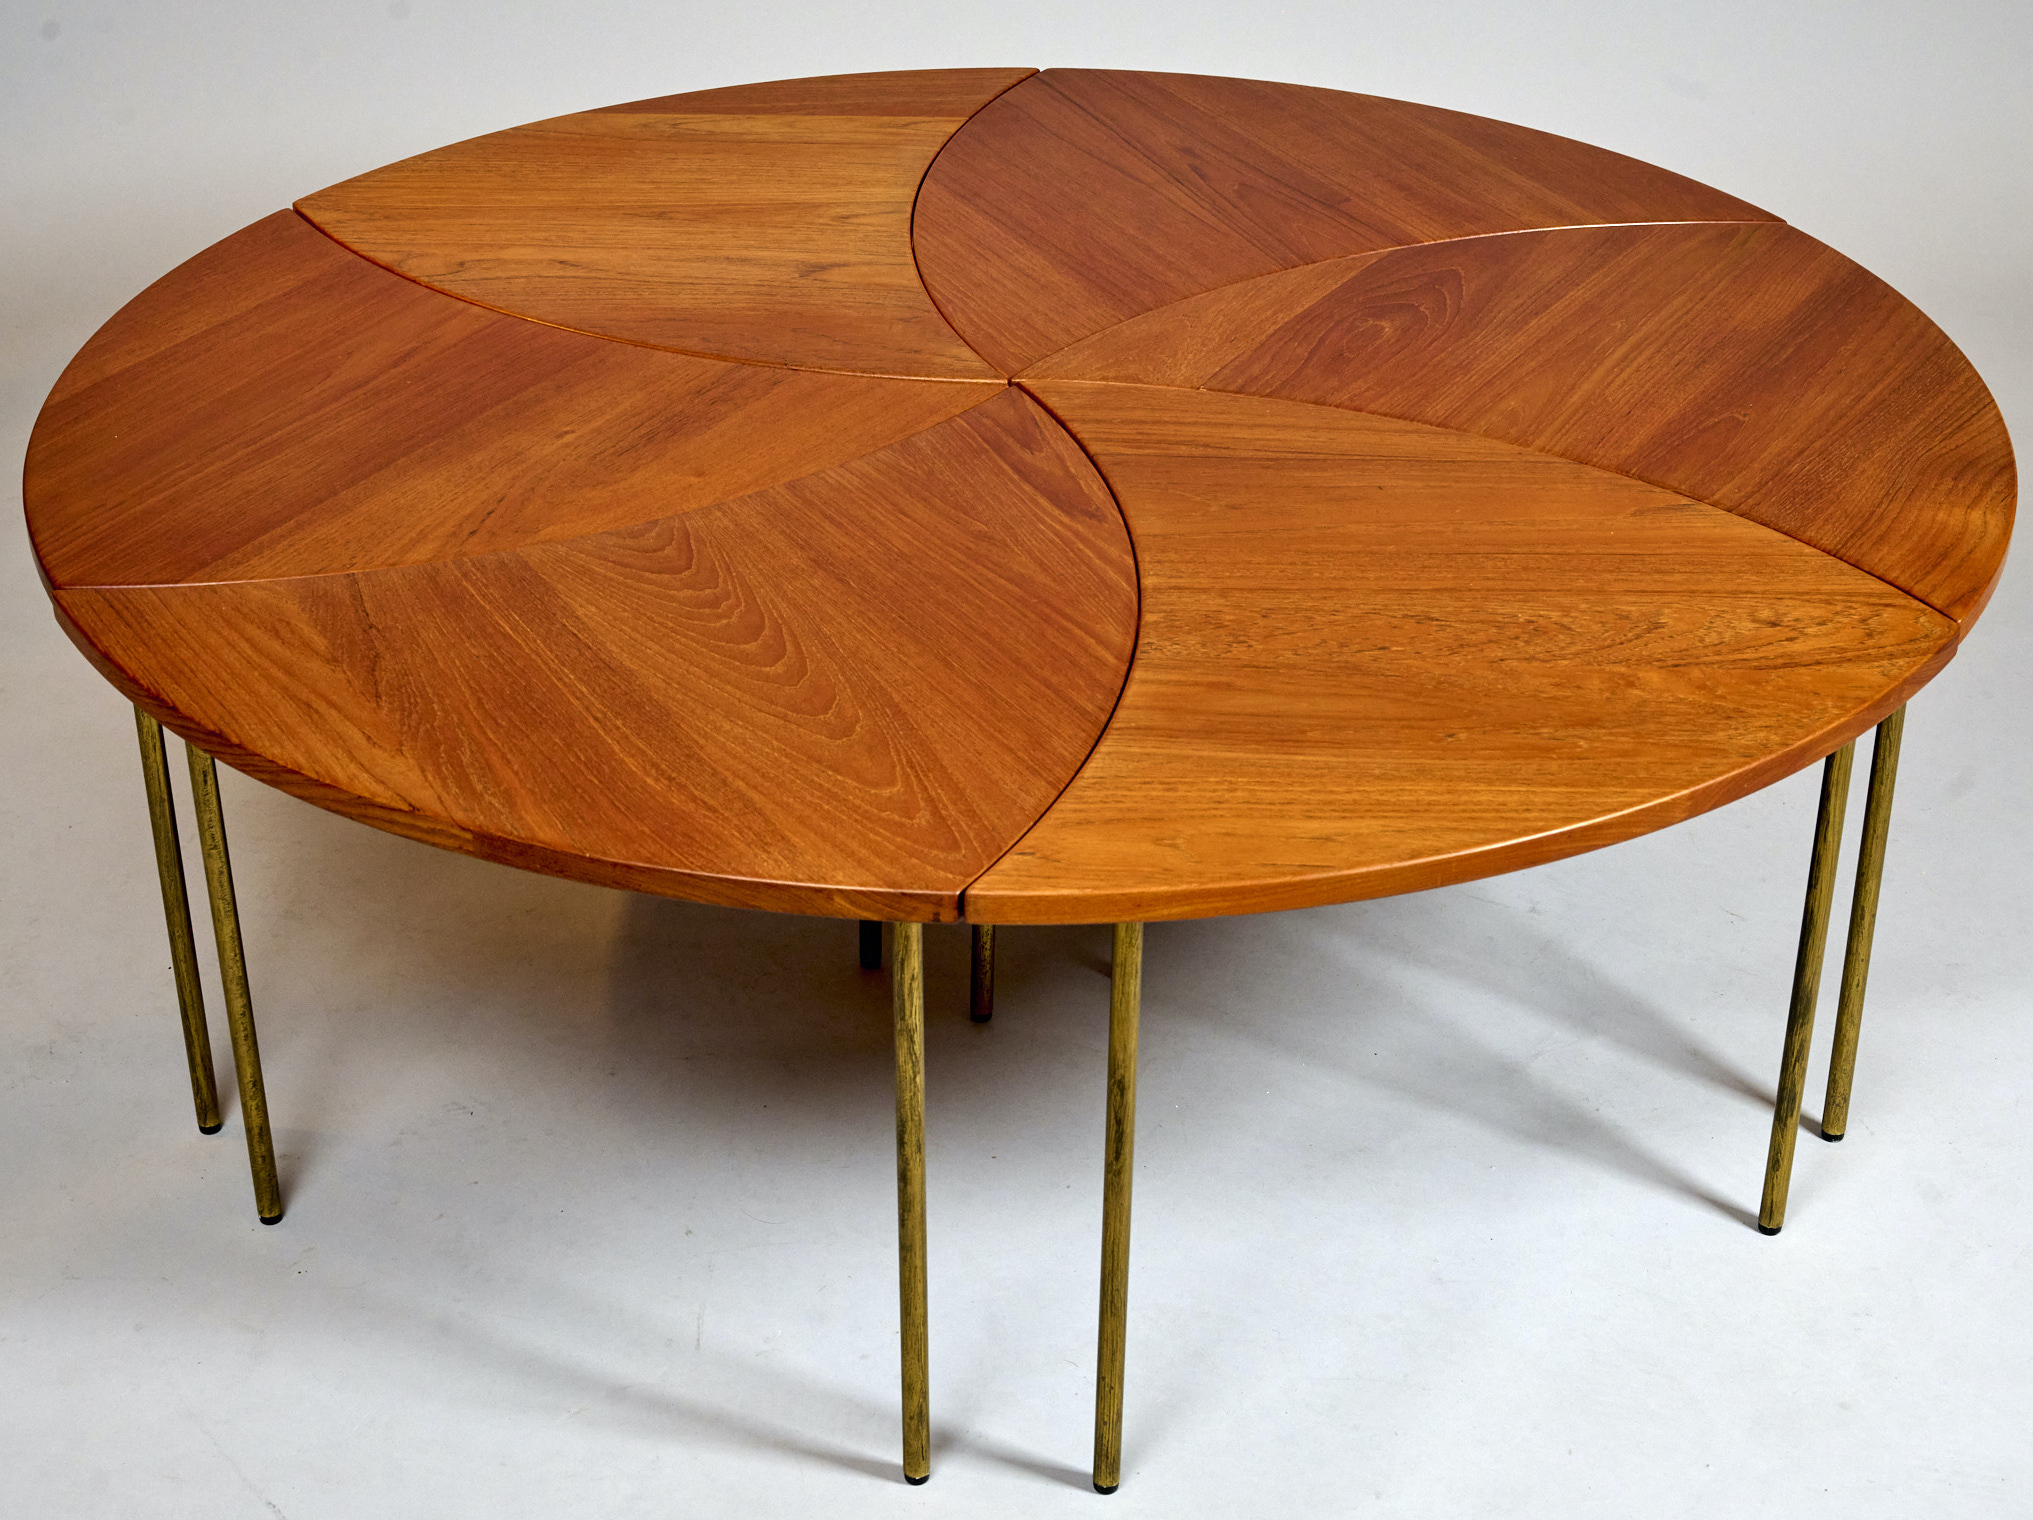 France & Son pinwheel table designed by Peter Hvidt